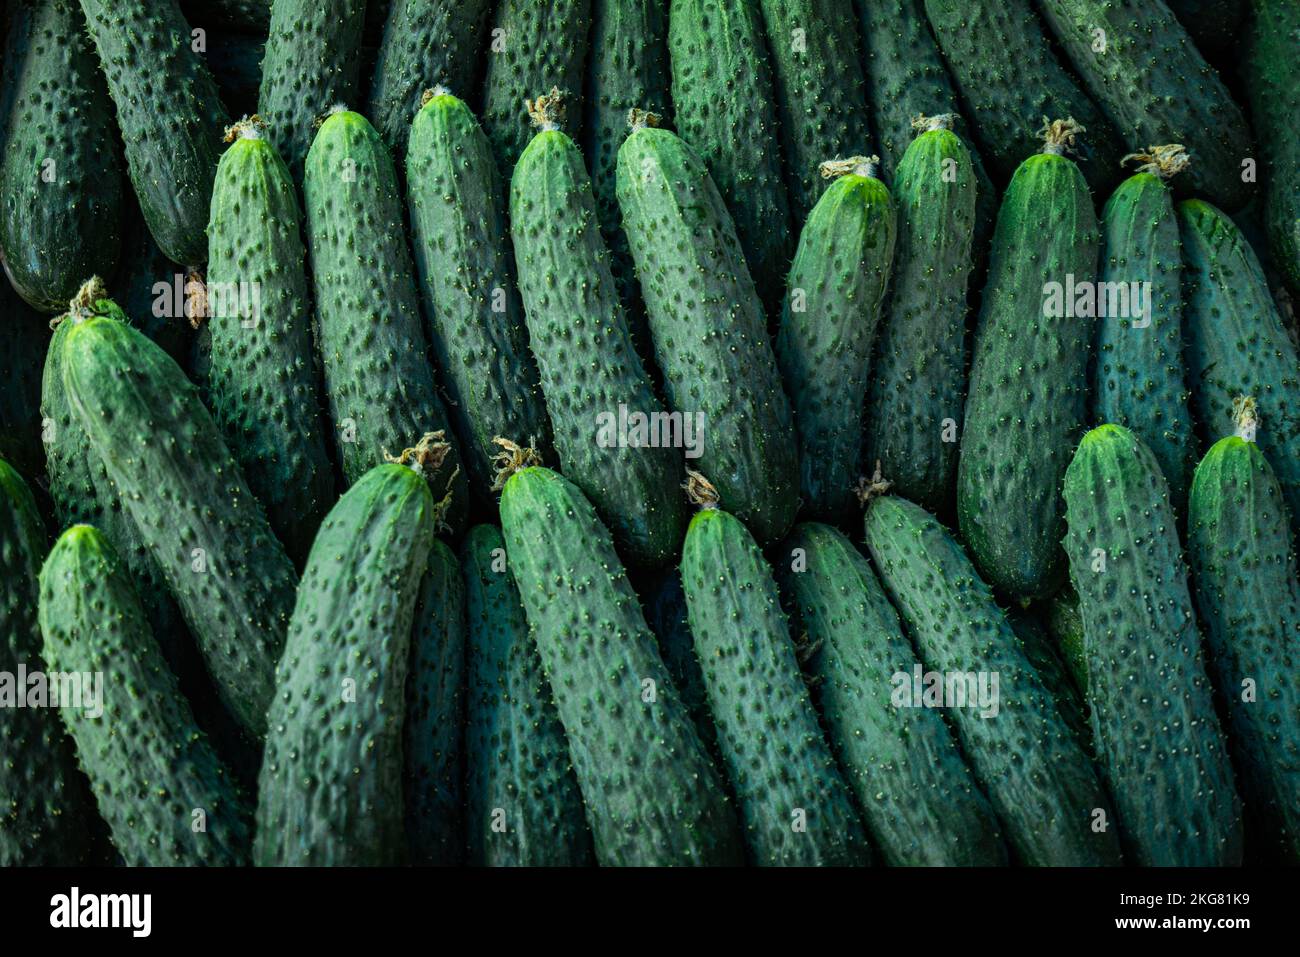 Fresh cucumber background. Green cucumbers Stock Photo